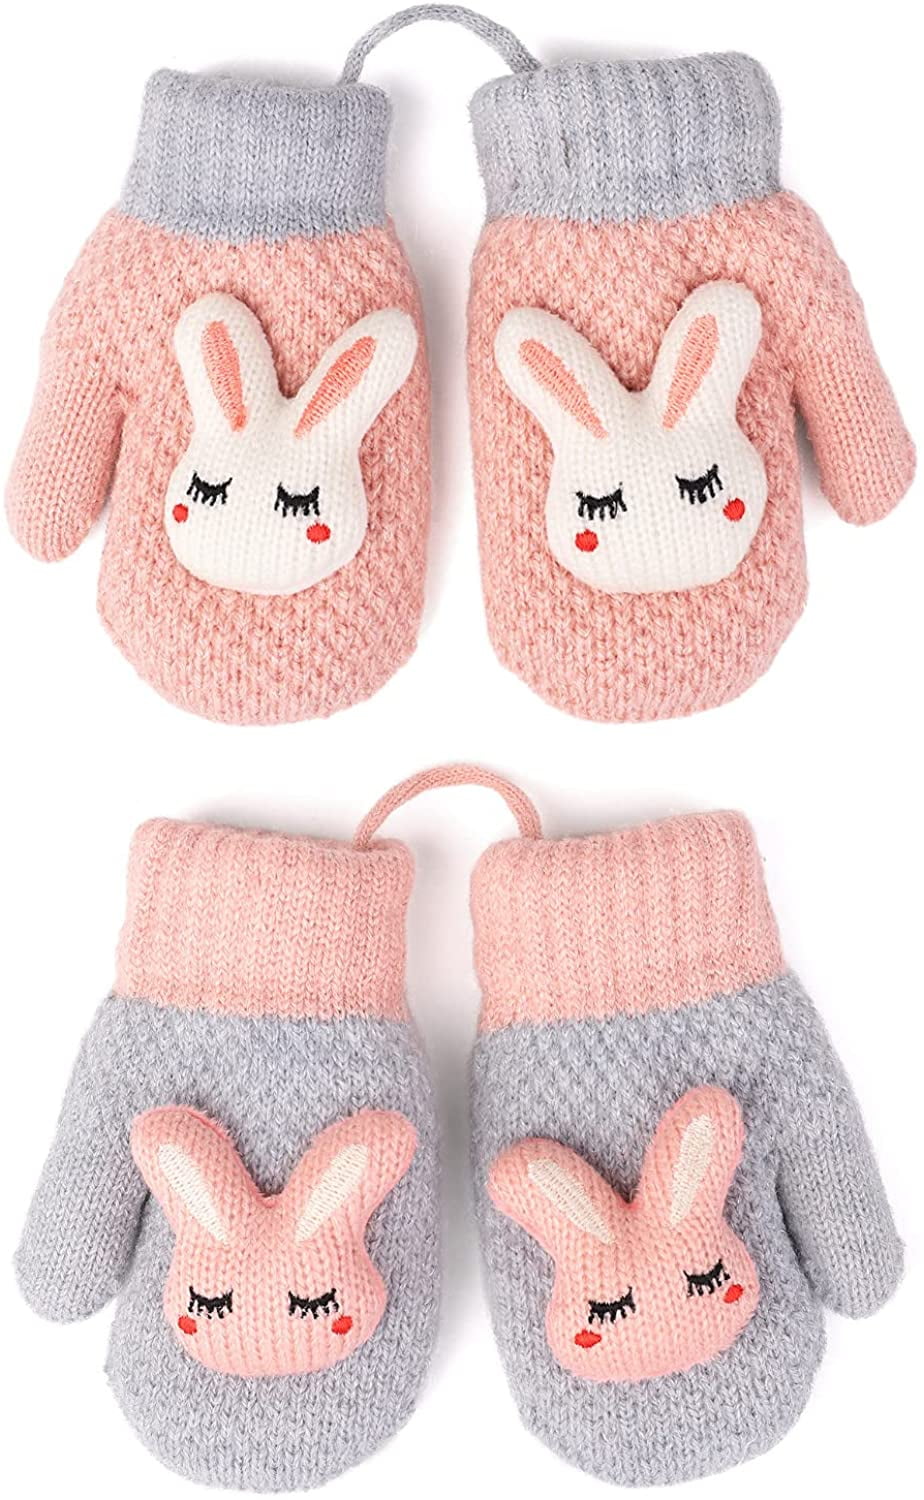 Baby Girls Toddler Autumn Sticker Mittens Gloves With String Size 6Month-4 Years 